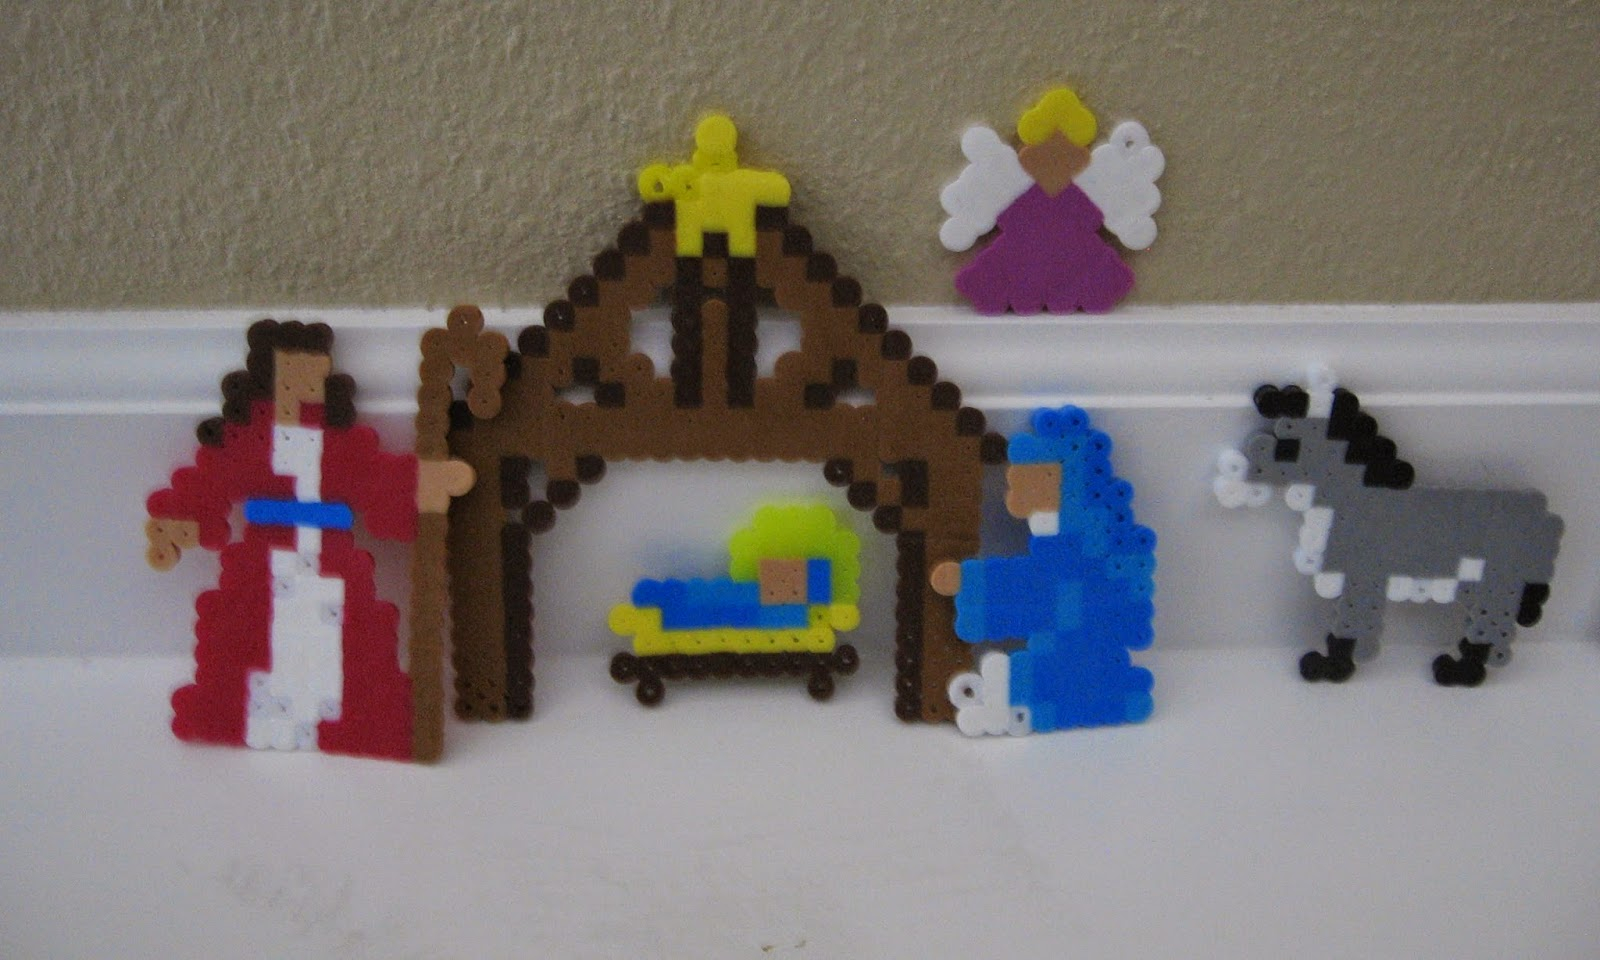 How To Make An Origami Nativity Scene Make Origami Nativity Scene How To Make An Origami Nativity